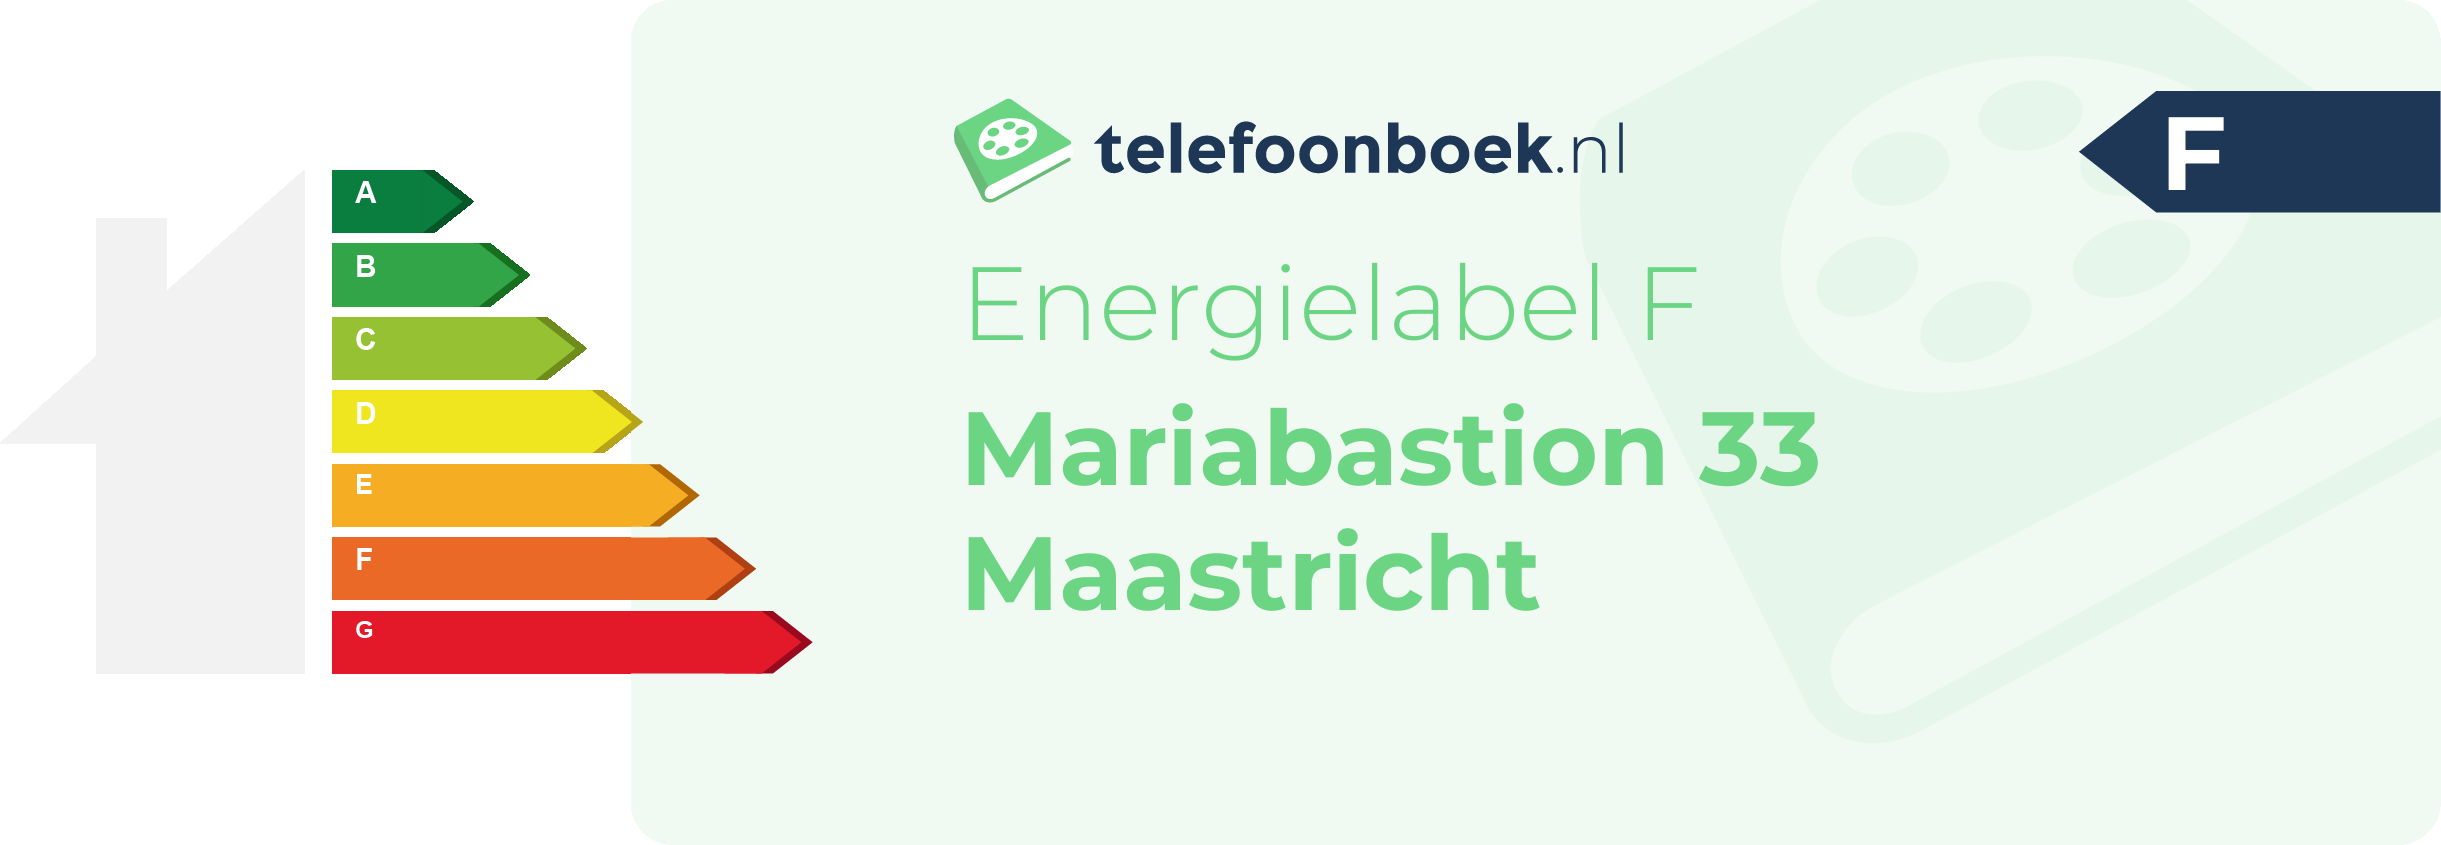 Energielabel Mariabastion 33 Maastricht